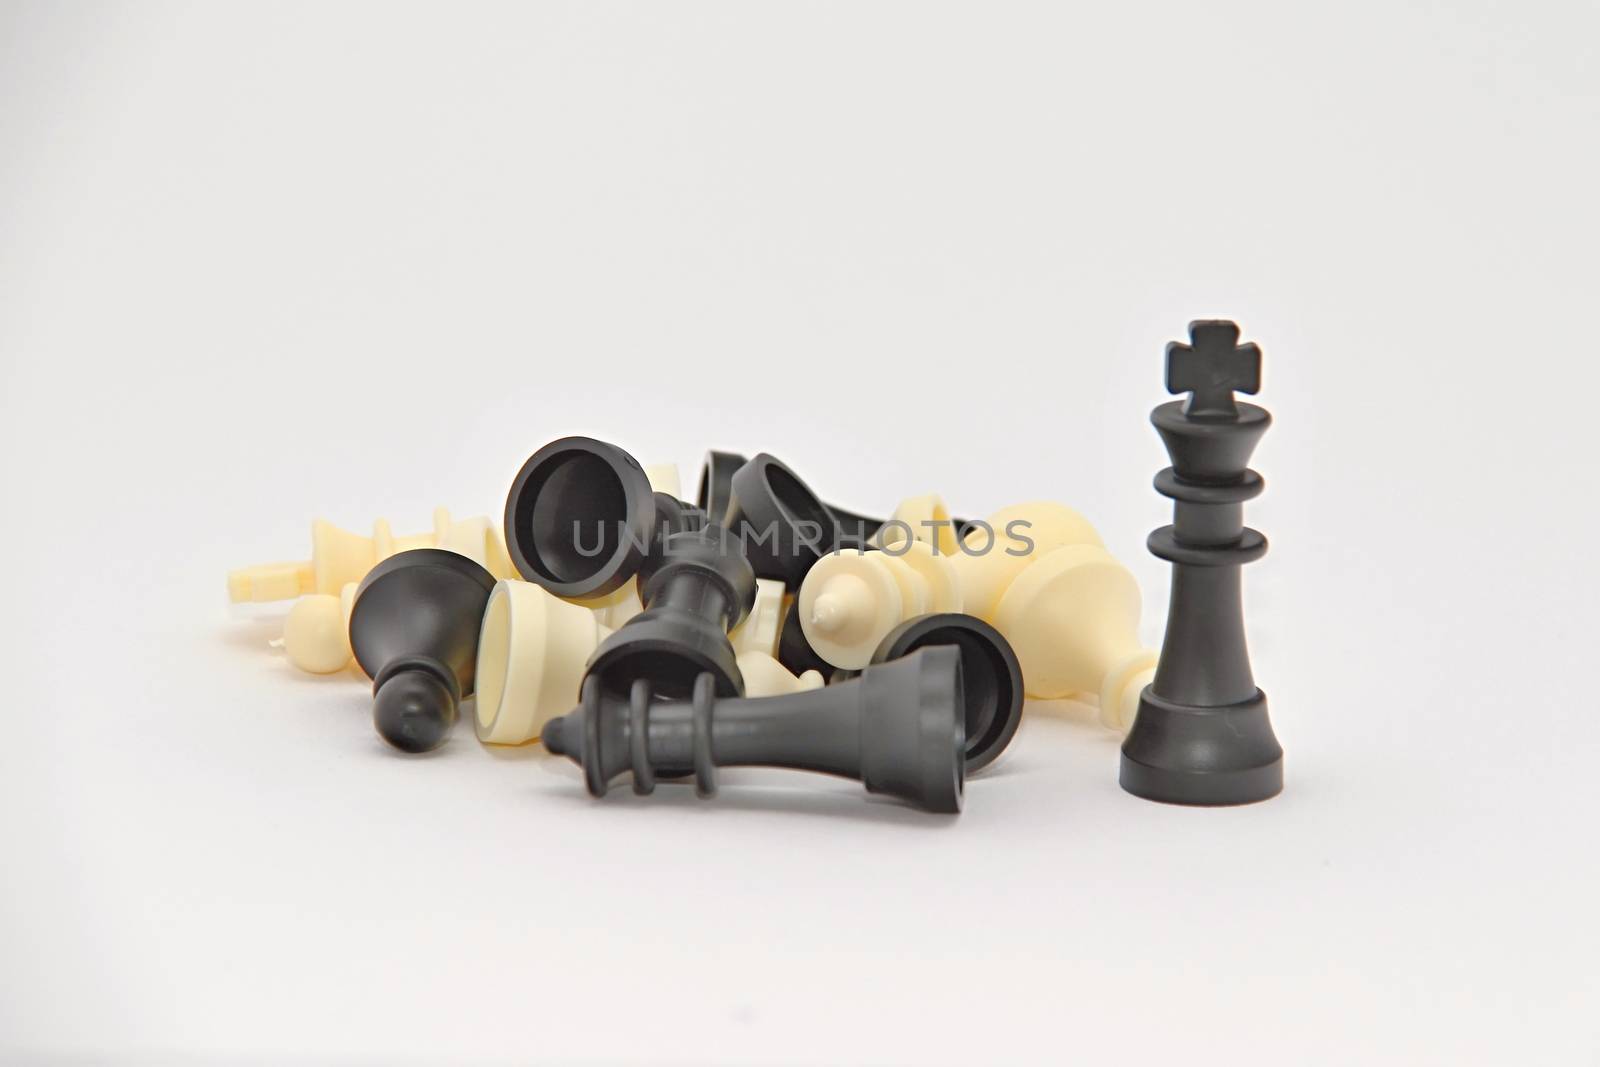 Chess Figurines by Dermot68